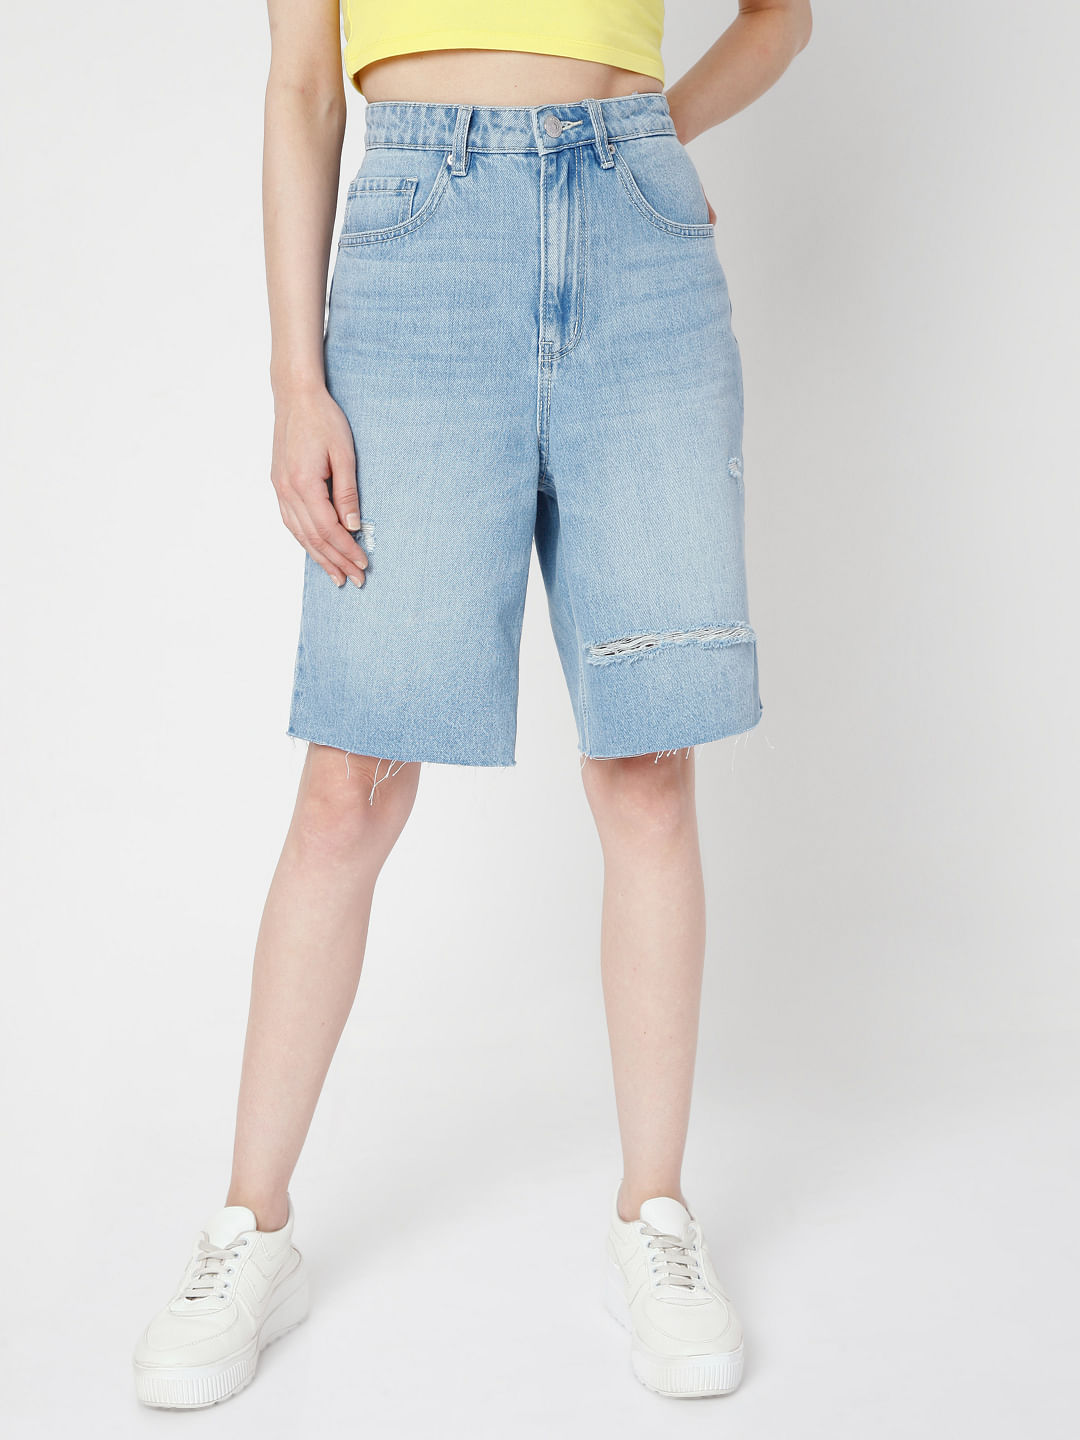 Distressed Denim Cut Off High Waisted Shorts DIY: Making Summer Wardrobe  Staples - Why Buy? DIY!